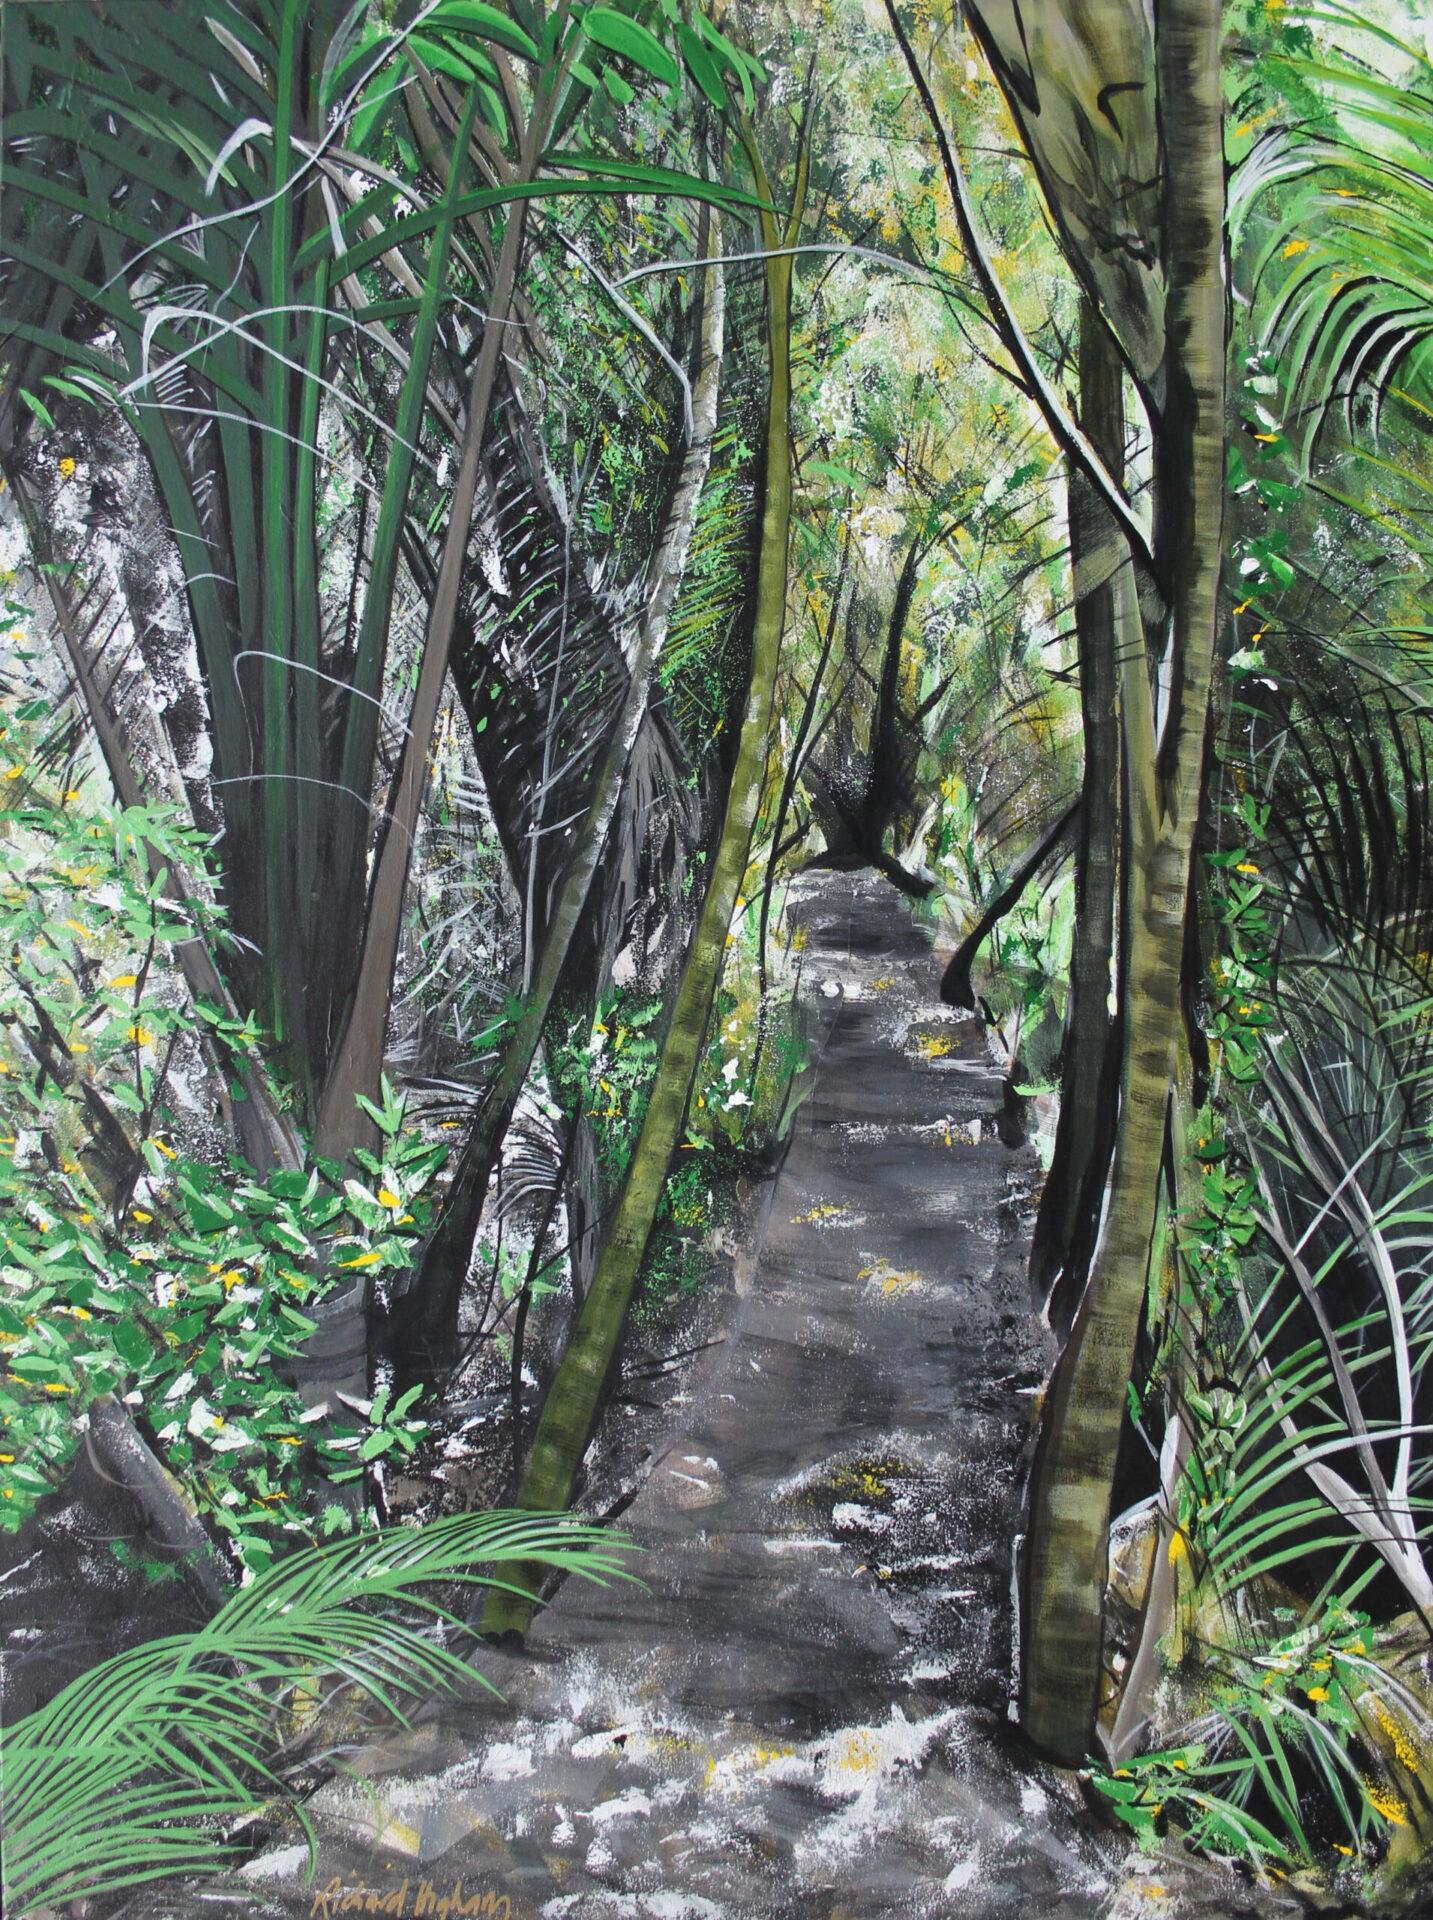 Bush Walk 1 - Painting by Richard Higham